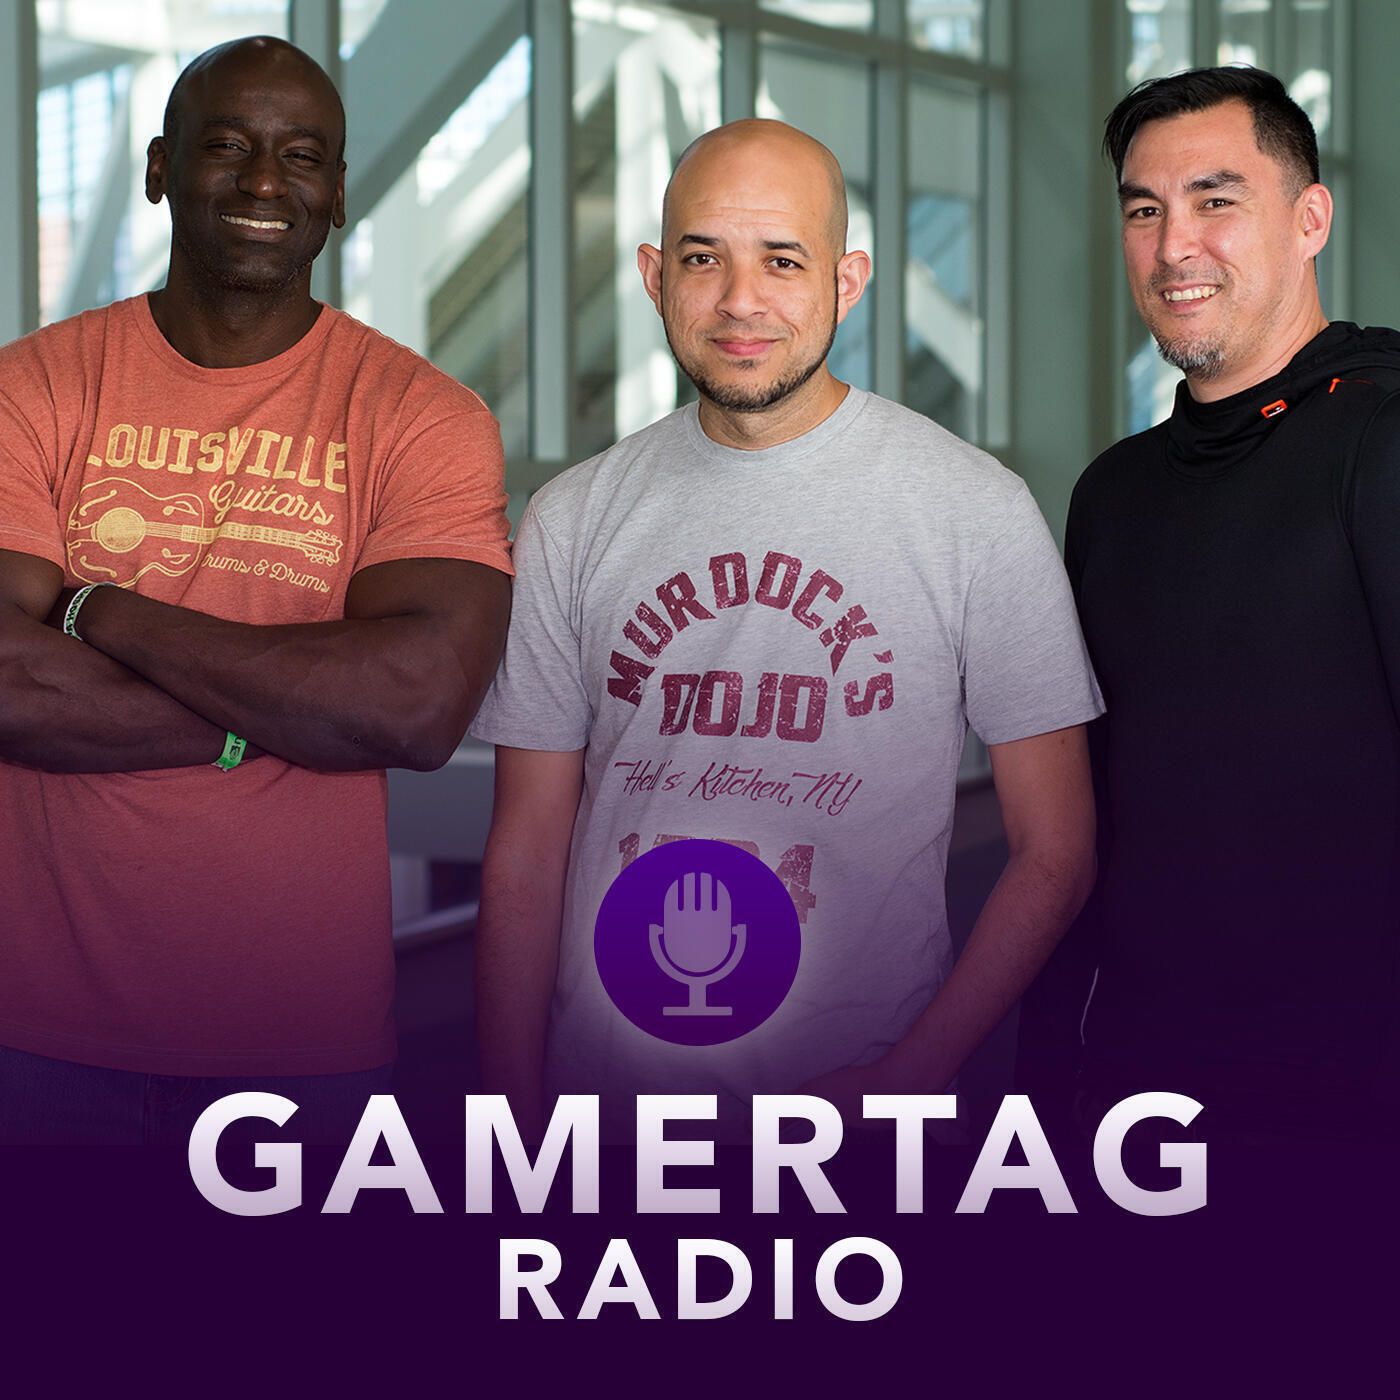 Gamertag Radio returns January 10, 2022